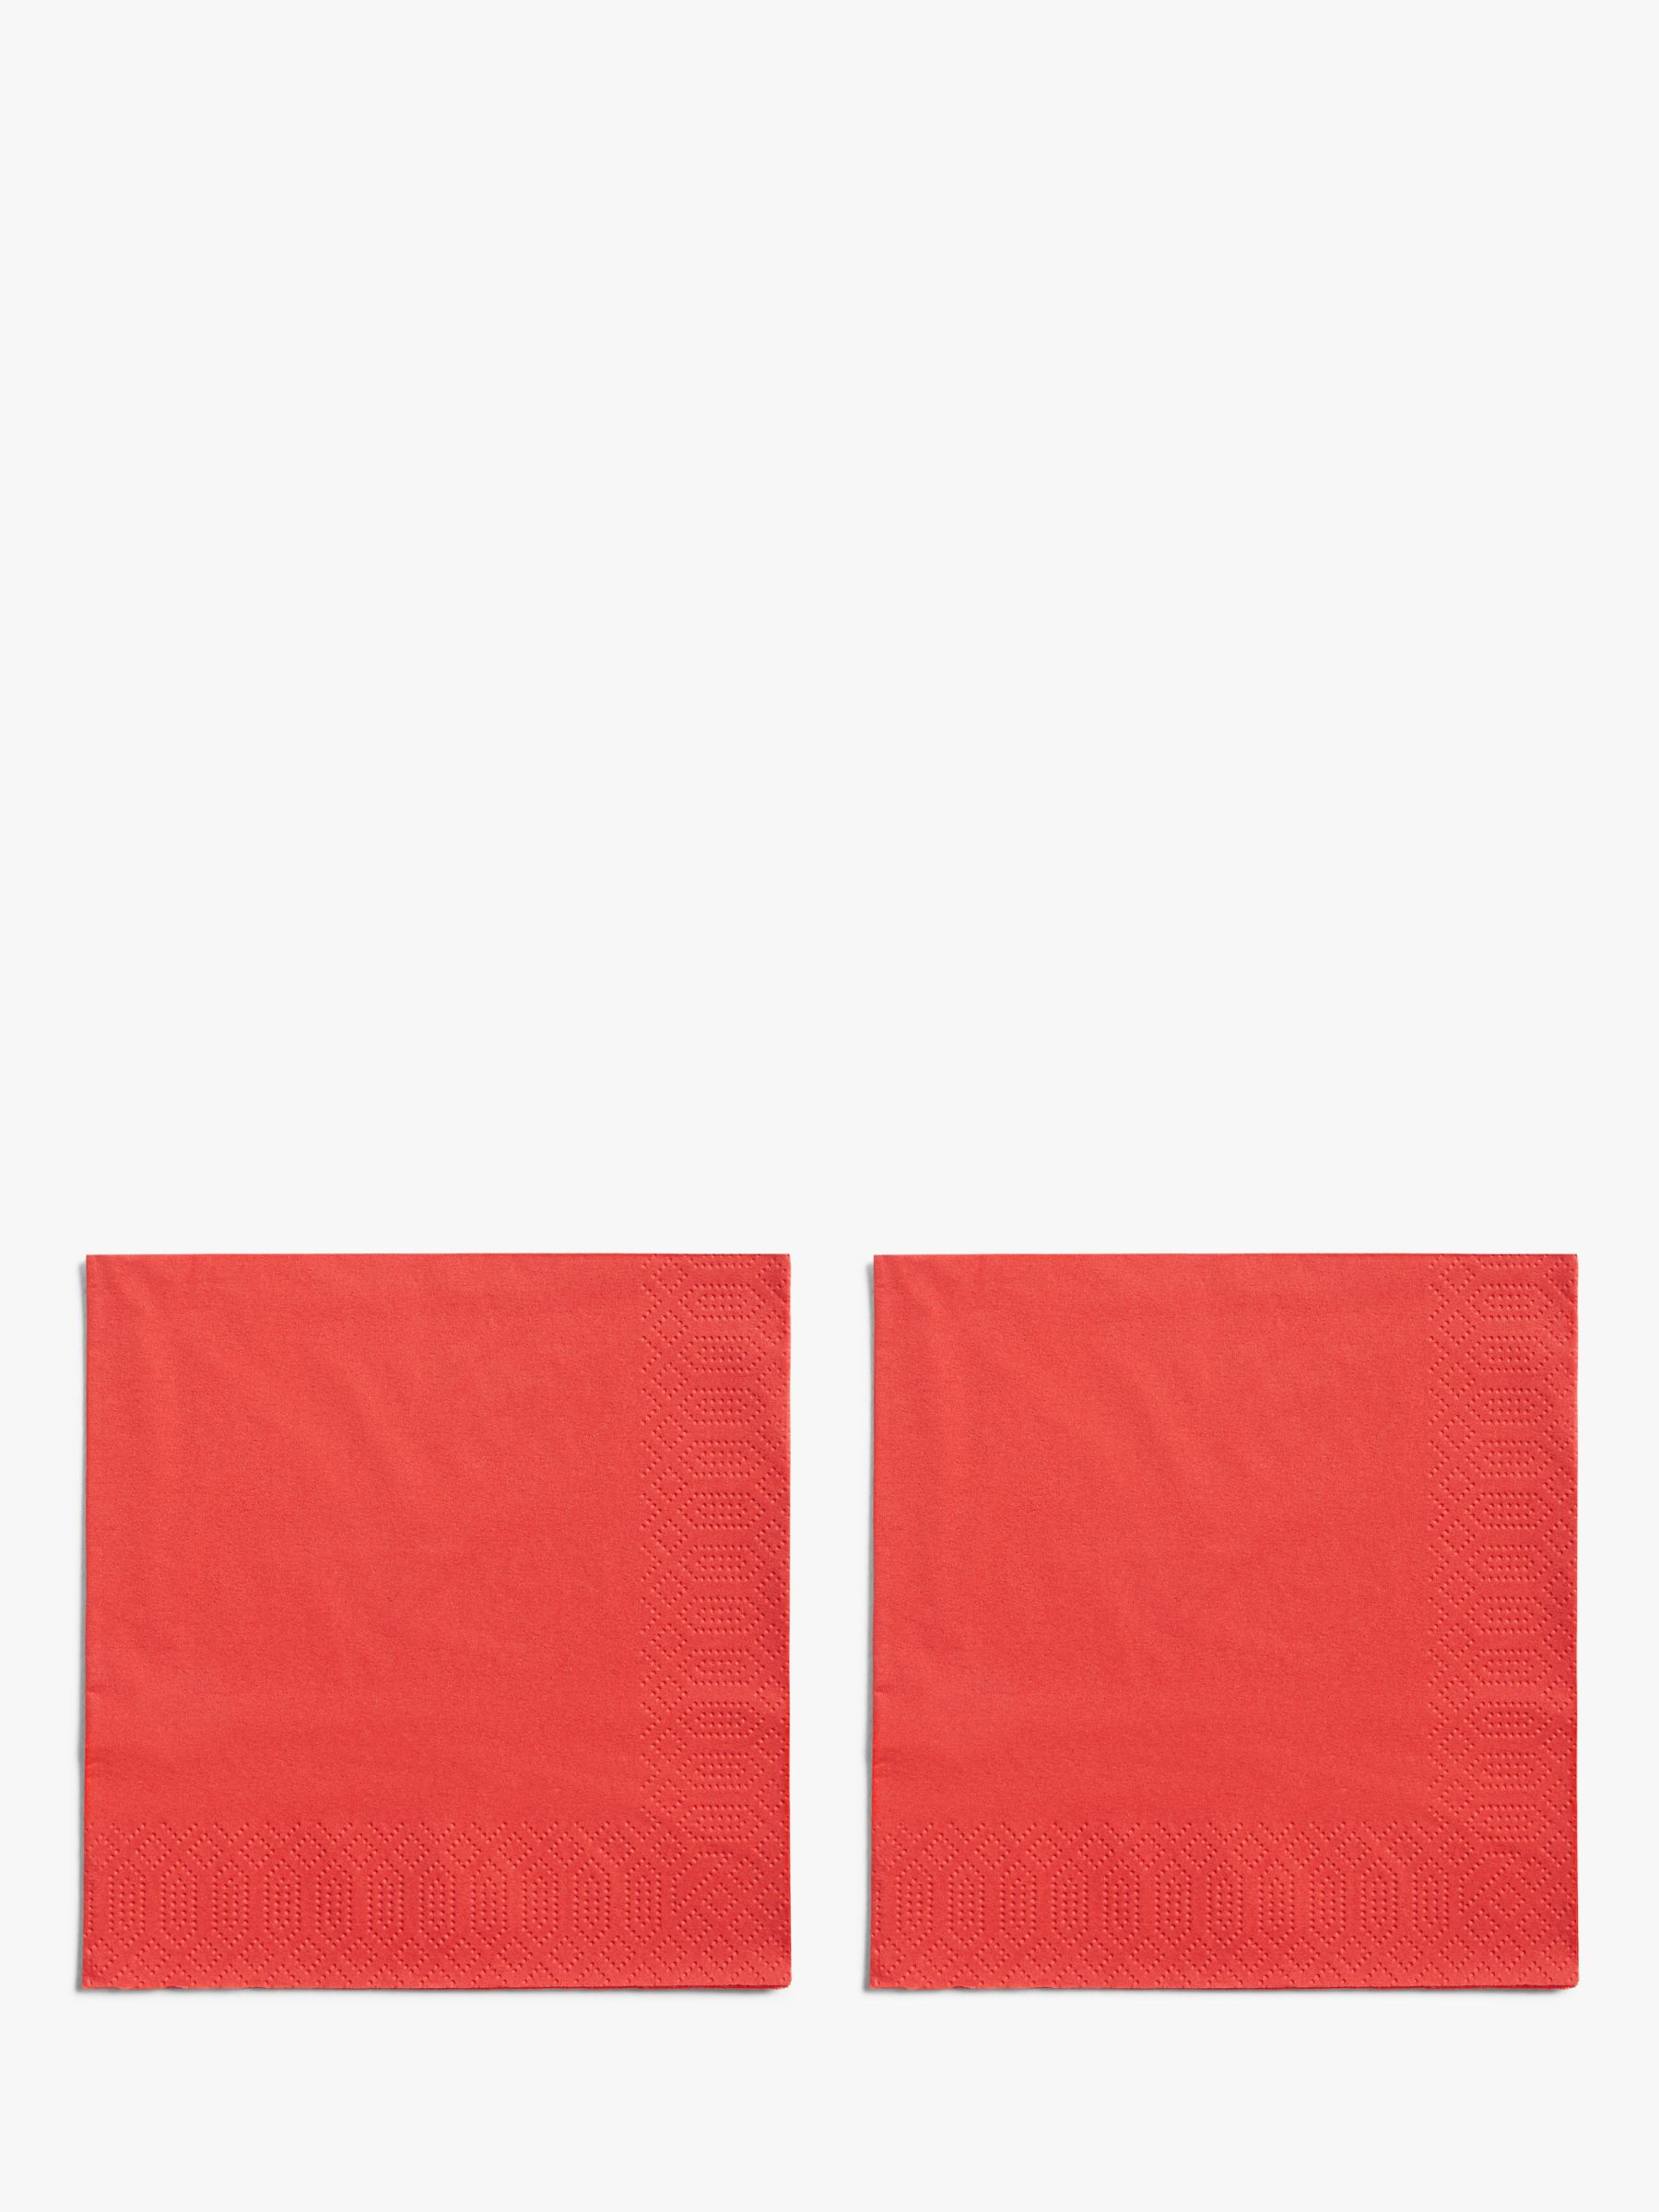 John Lewis 33 cm Paper Napkins, 2 Packs of 20, Red